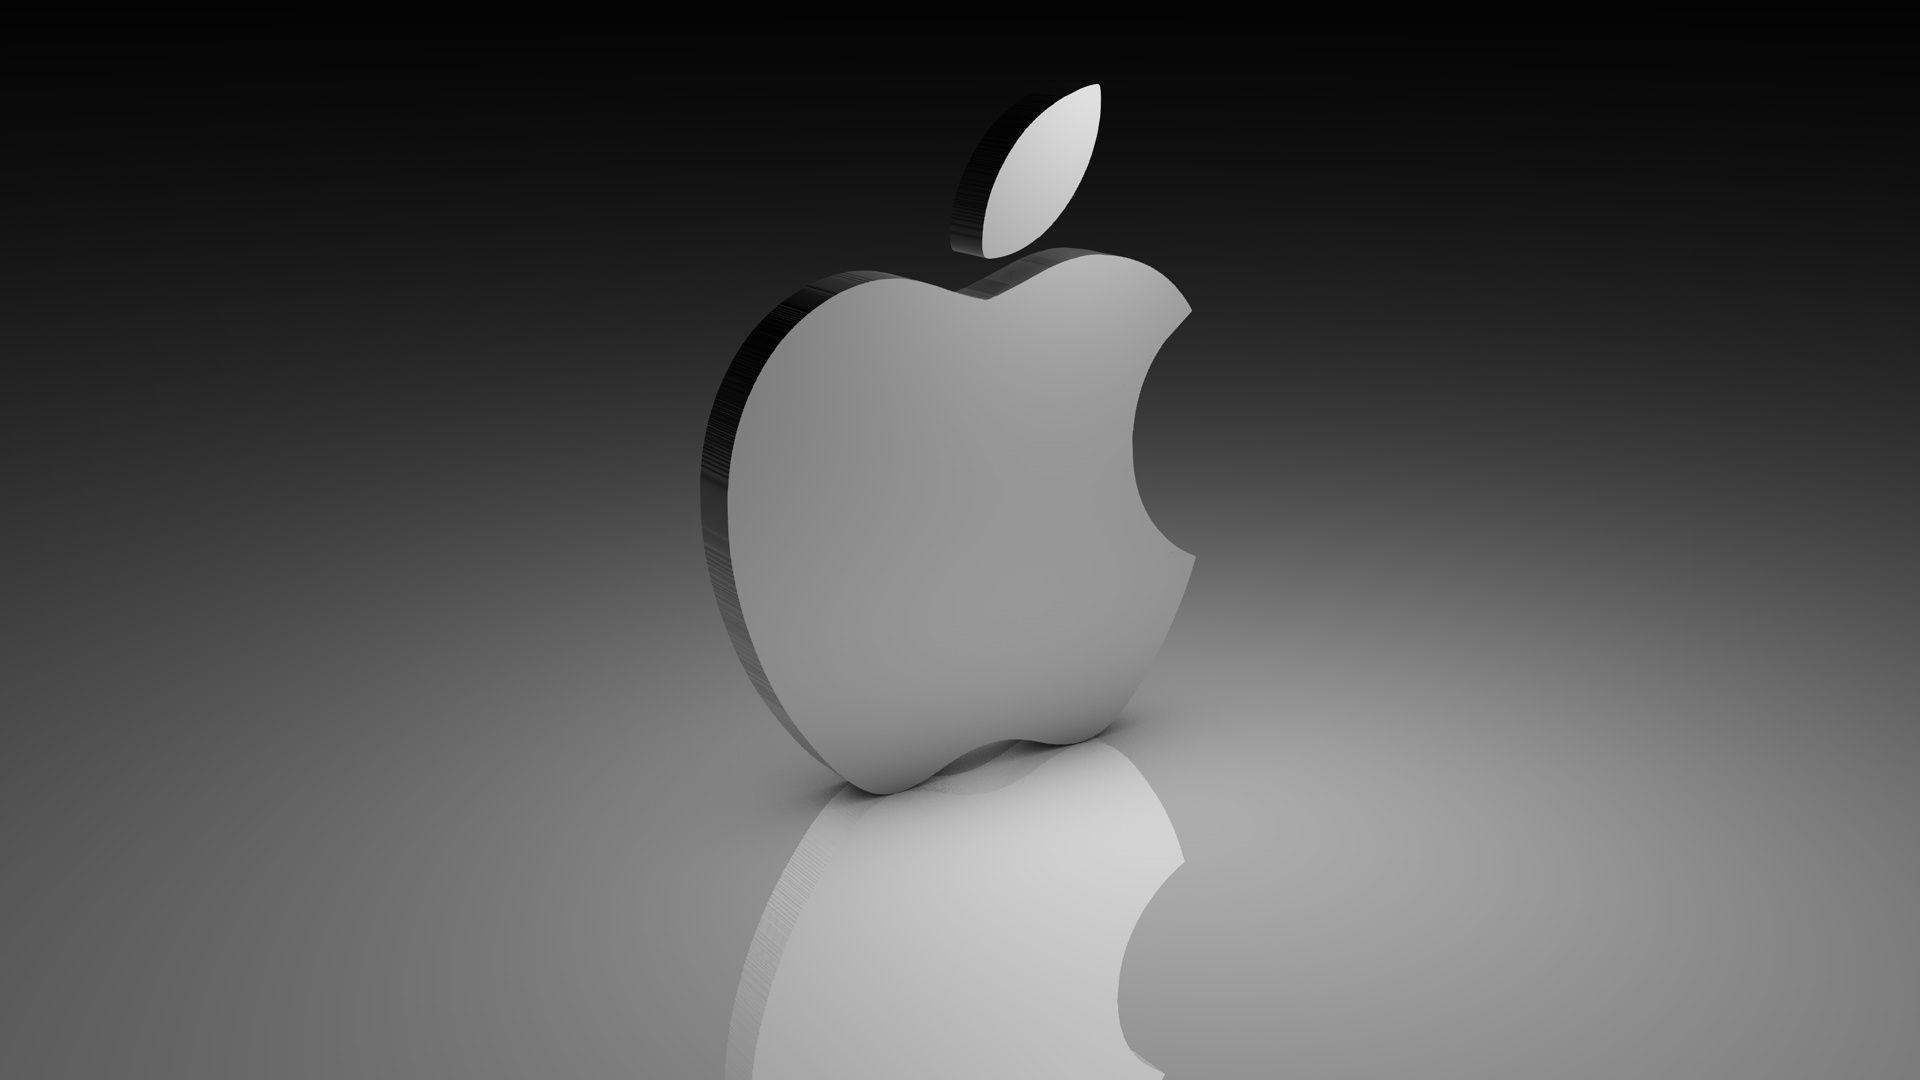 apple logo HD wallpaper download